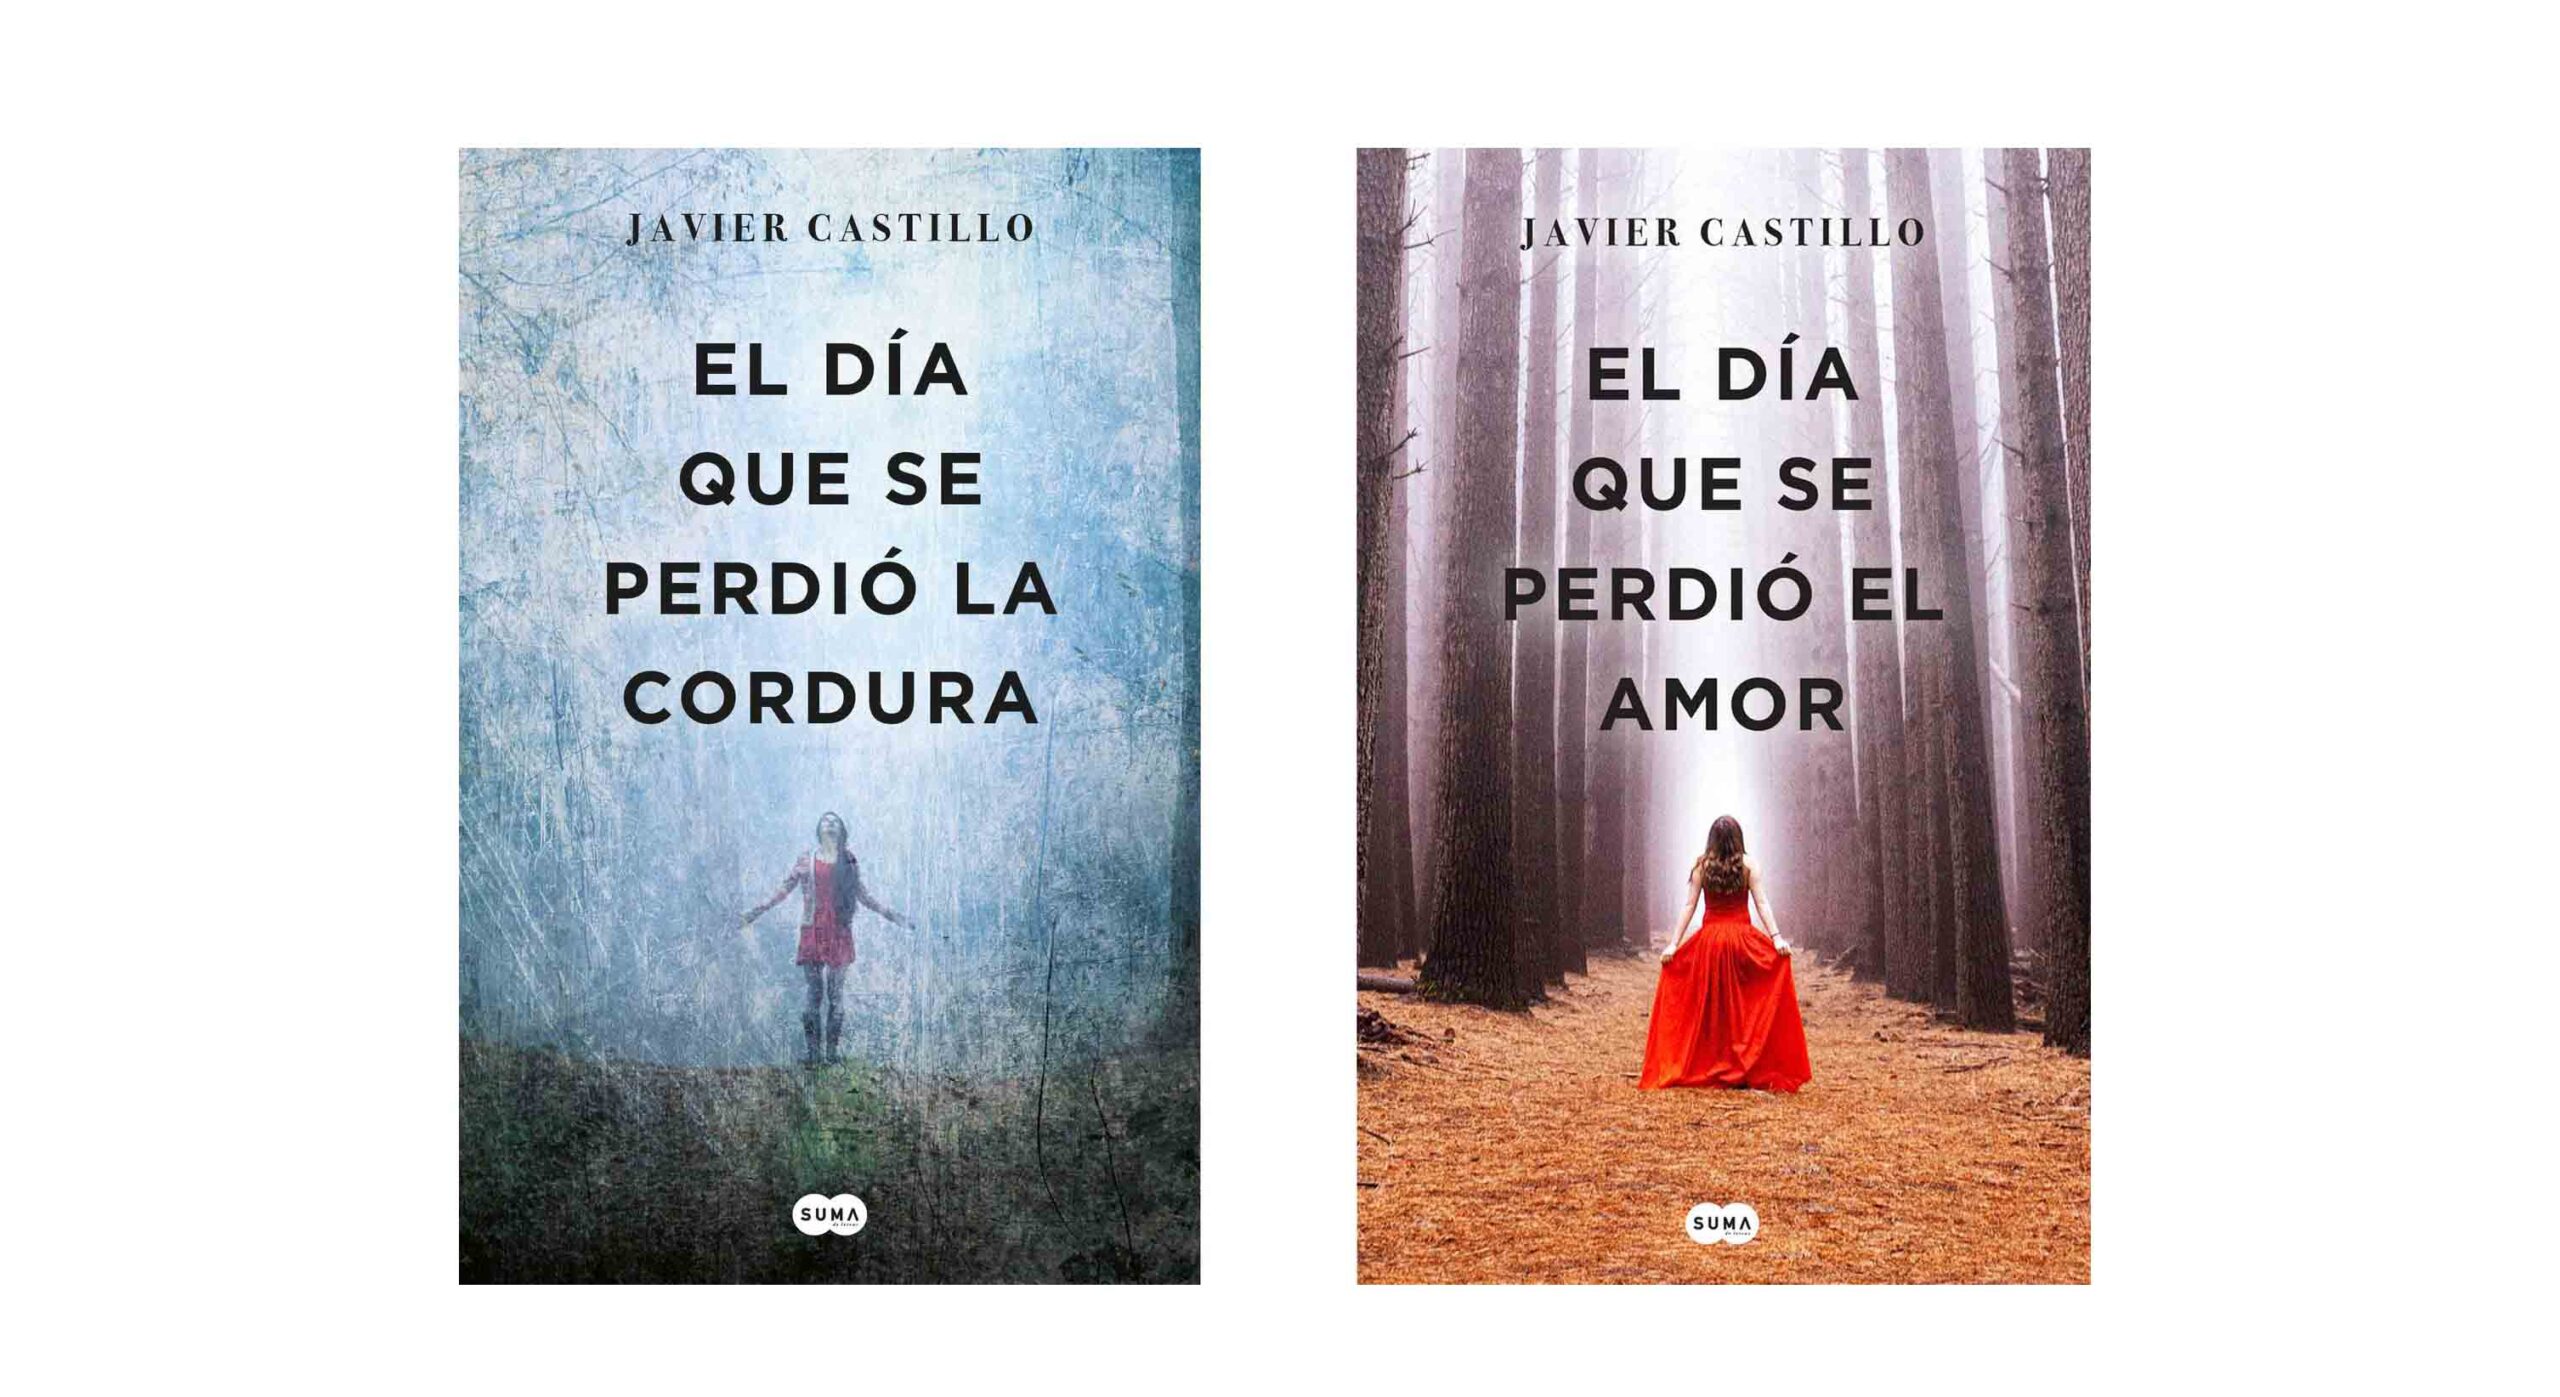 Las novelas de Javier Castillo se convertirán en serie